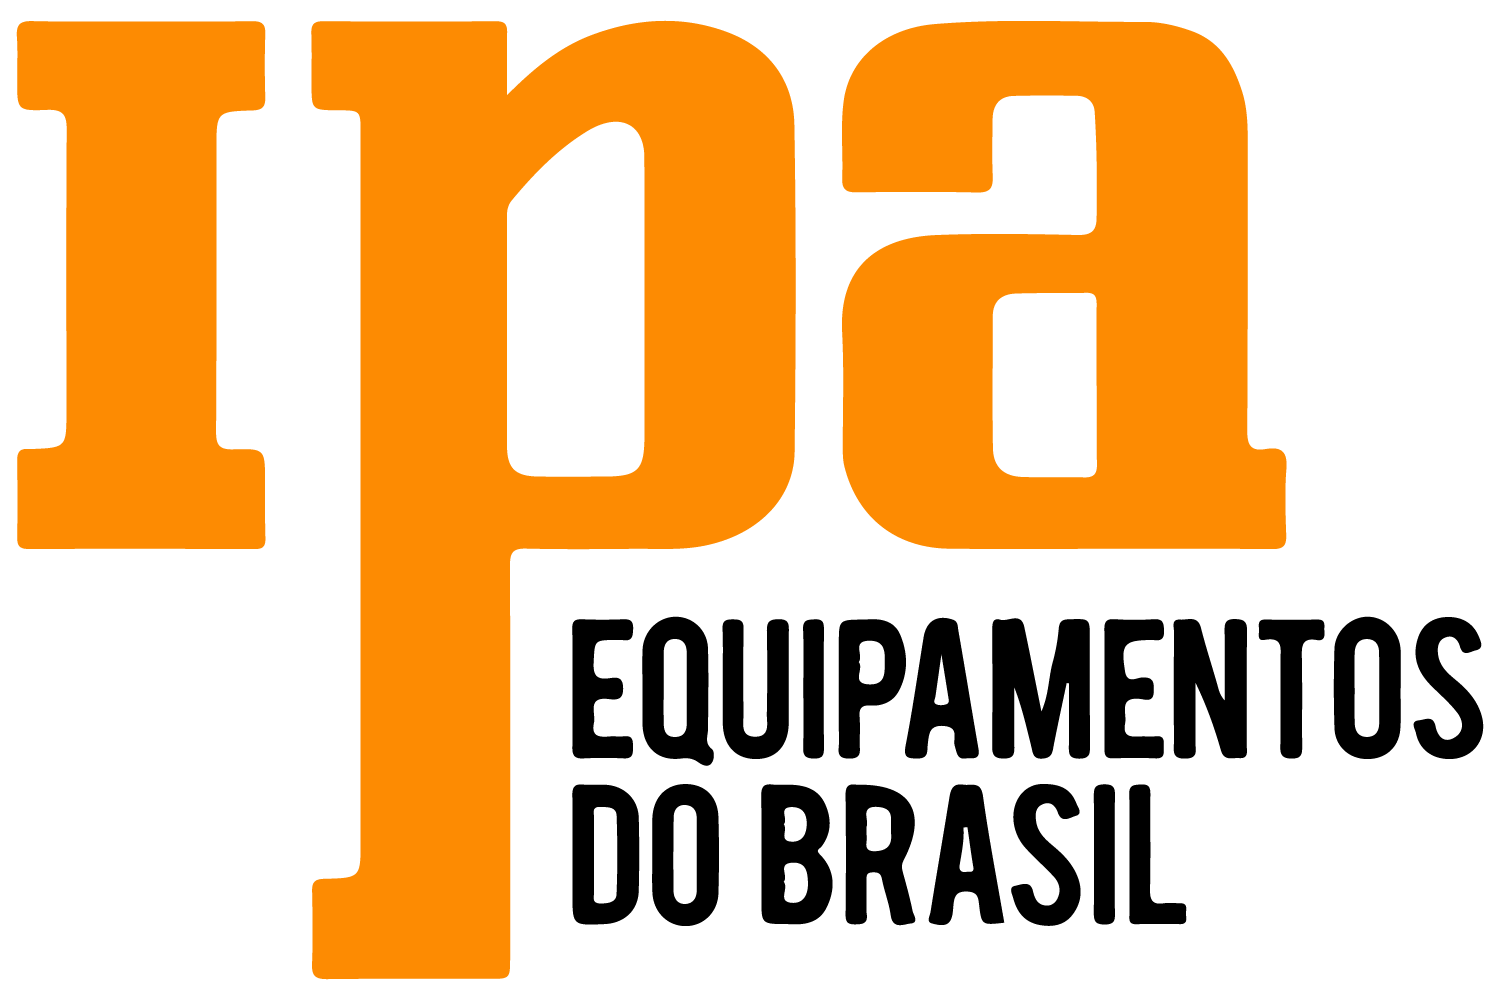 https://ipaequipamentos.com.br/wp-content/uploads/2022/03/Ipa-Equipamentos-Logotipo.png